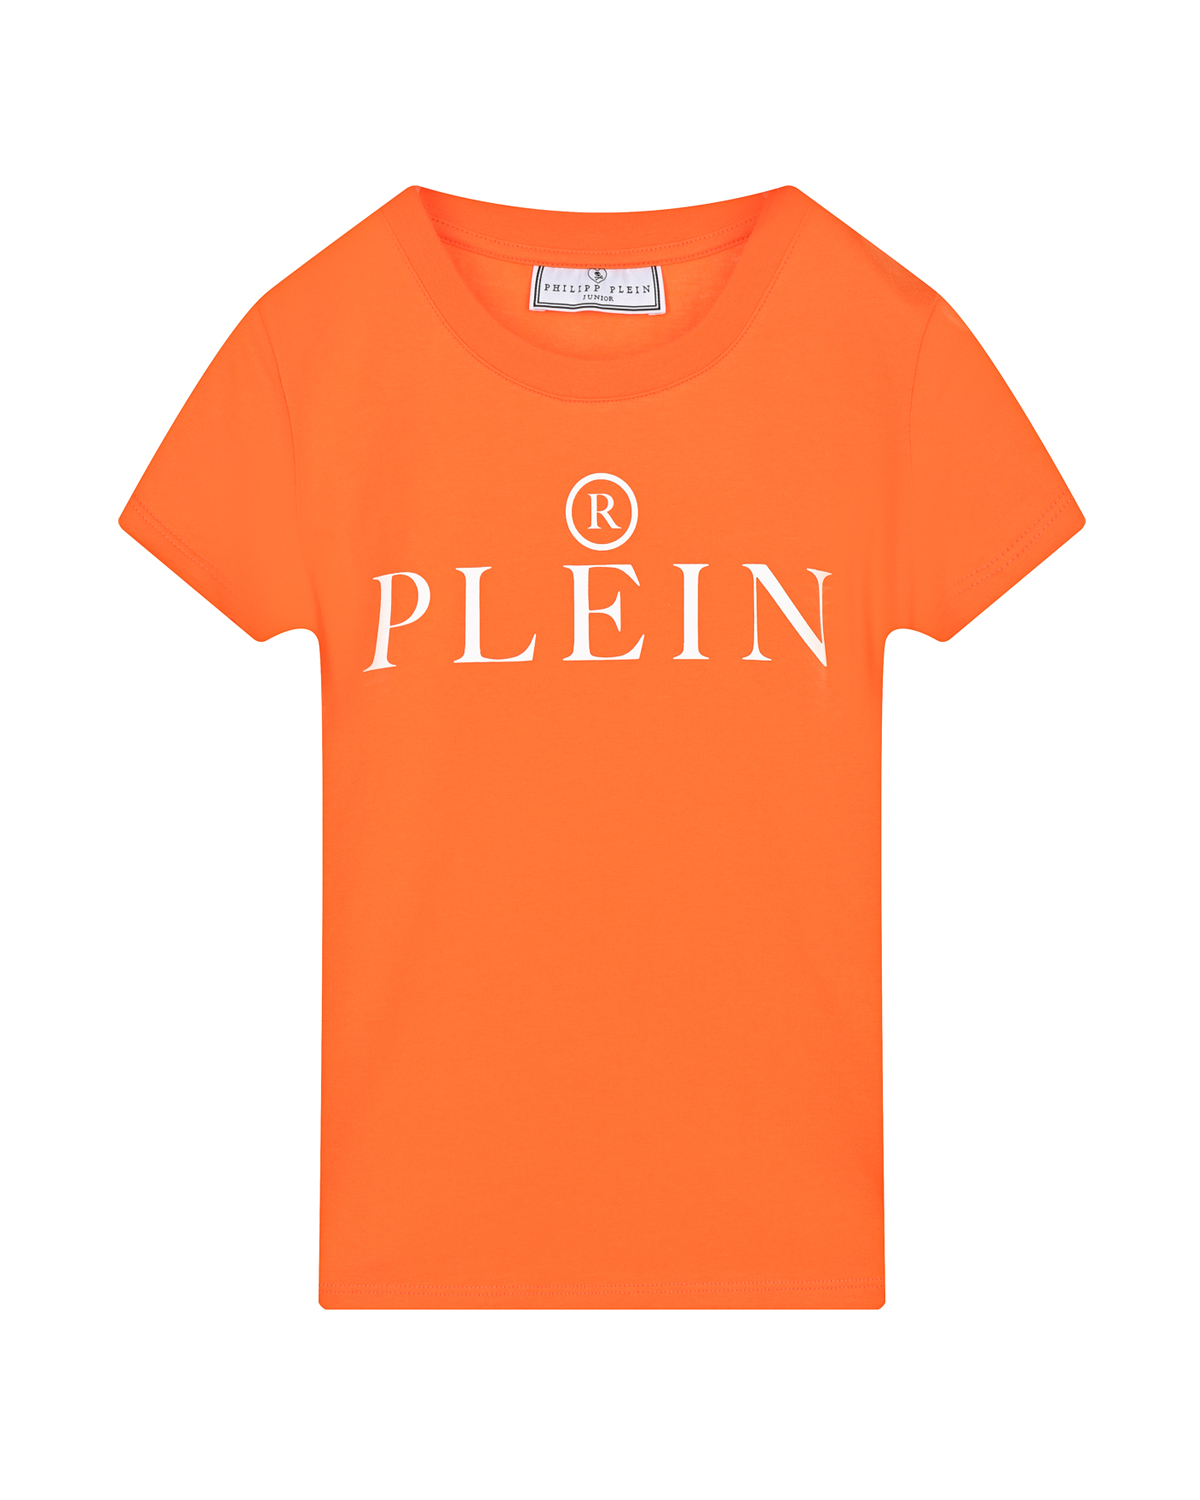 Оранжевая футболка с белым лого Philipp Plein, размер 152, цвет оранжевый - фото 1